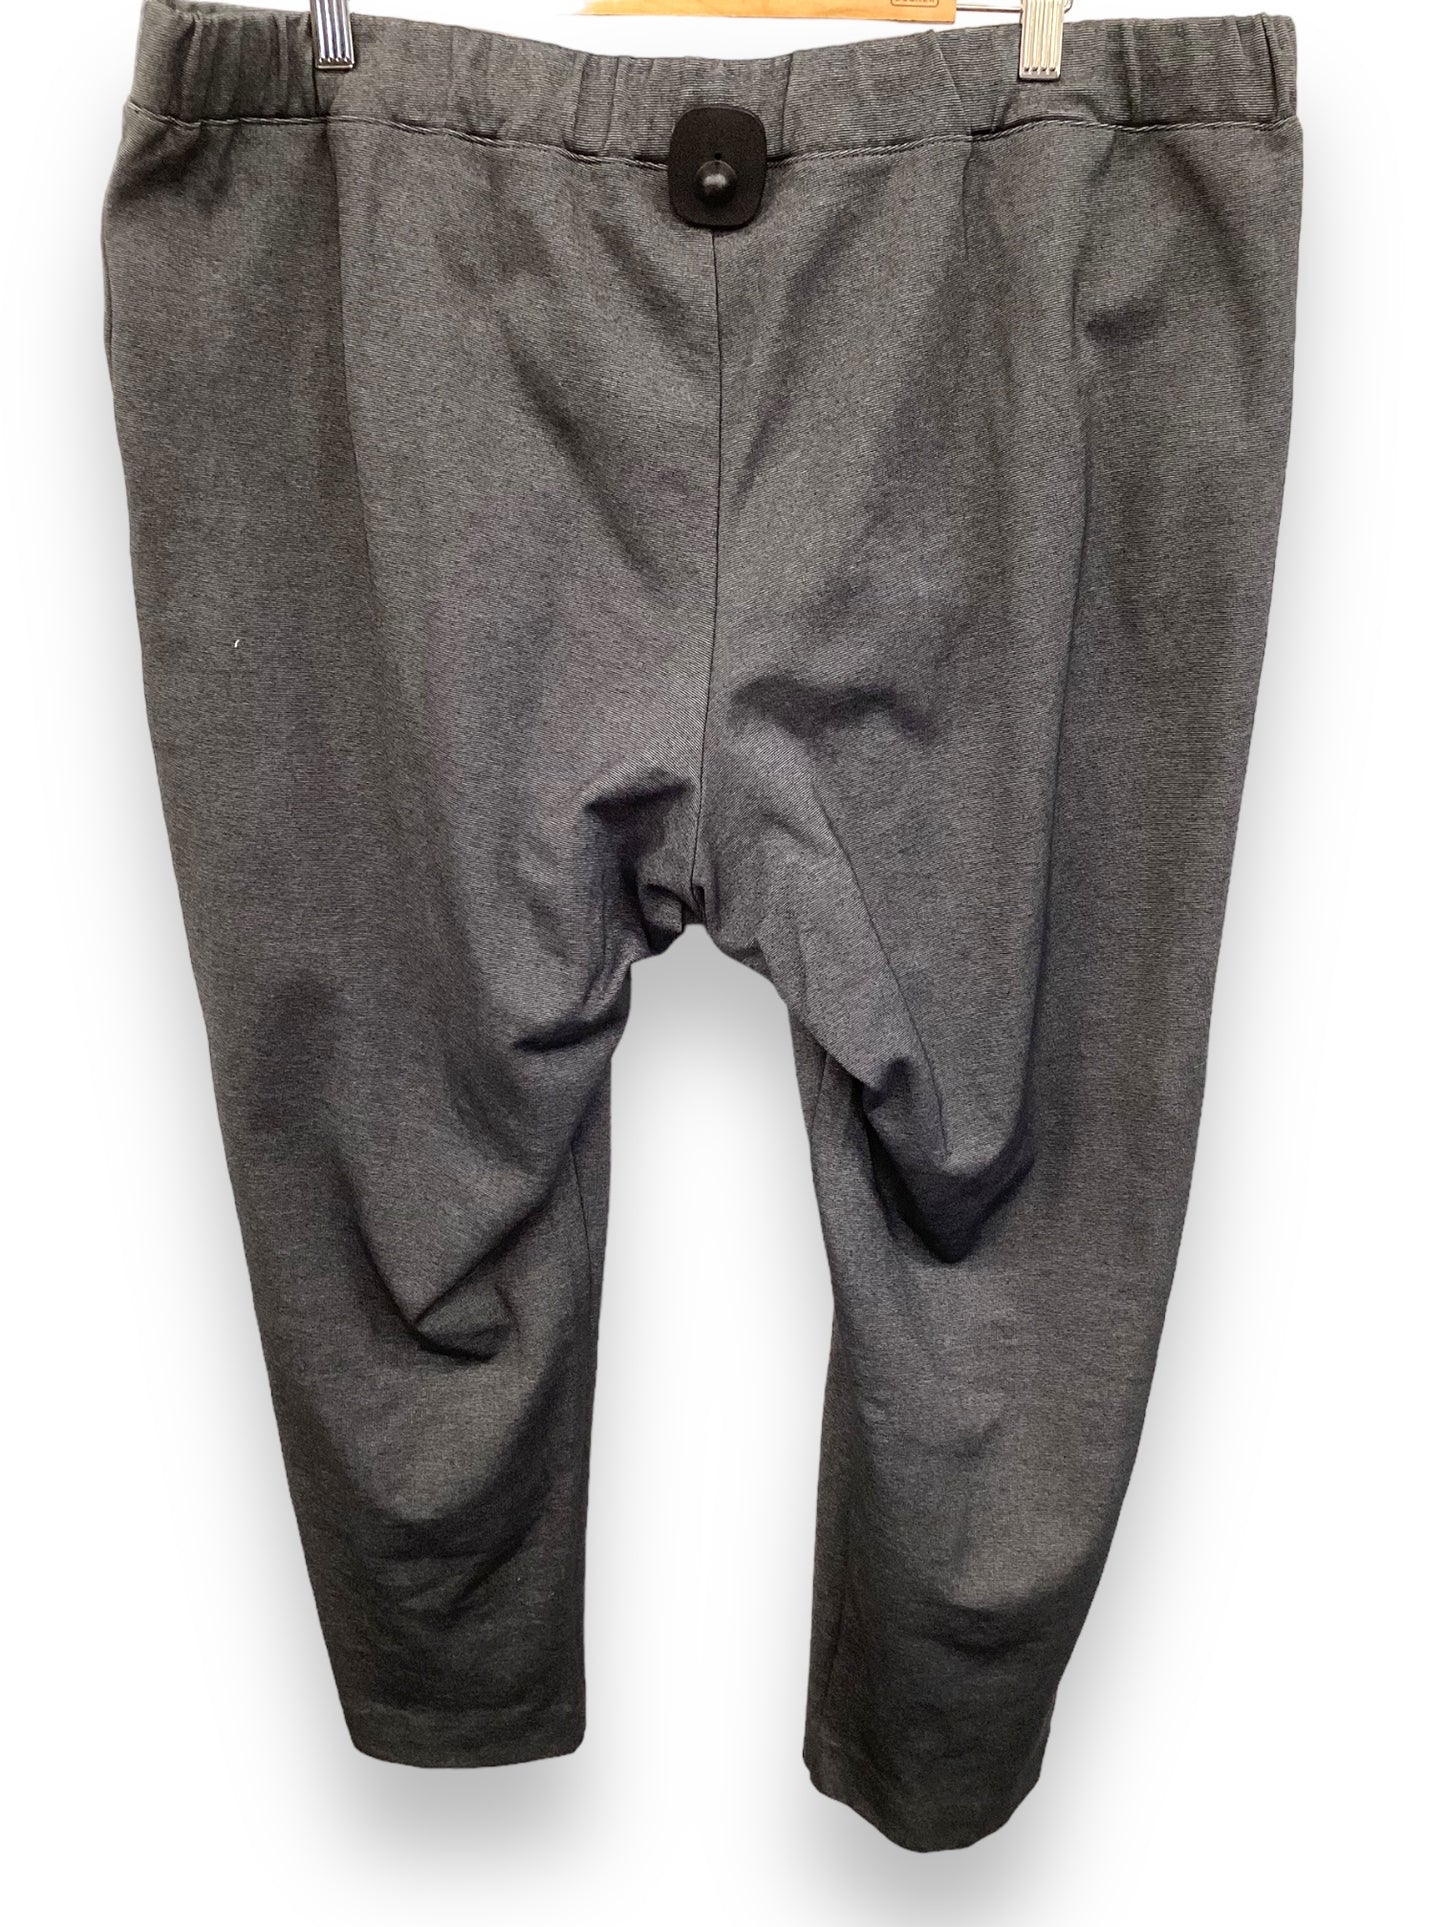 Pants Work/dress By J Crew  Size: Xxl